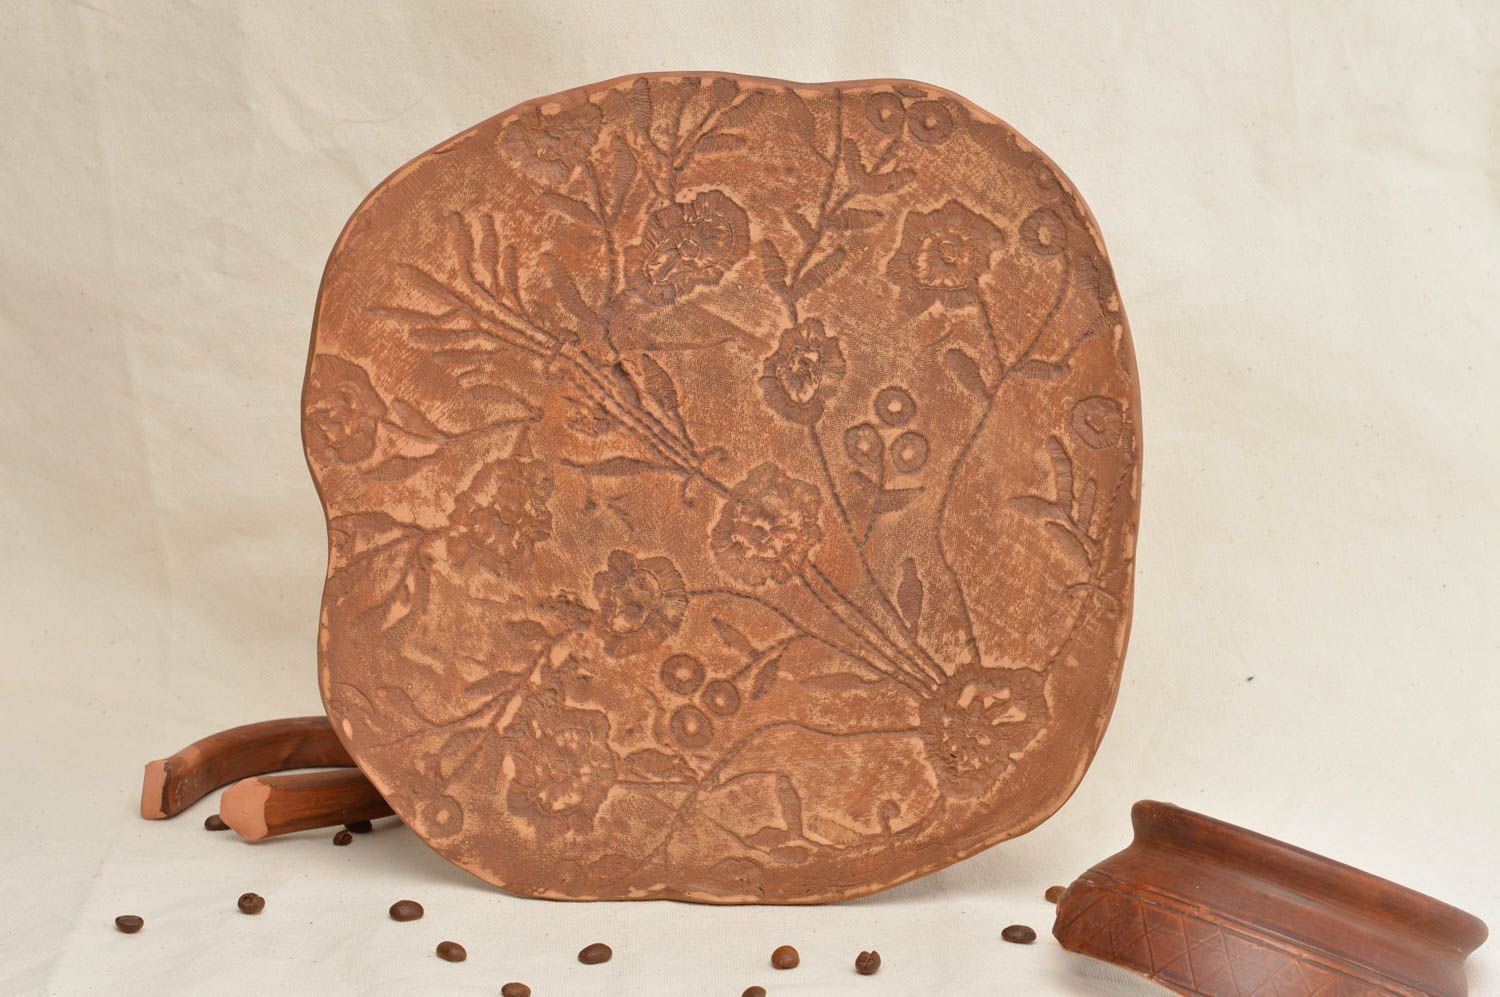 Unusual handmade ceramic plate designer clay plate table setting ideas photo 1